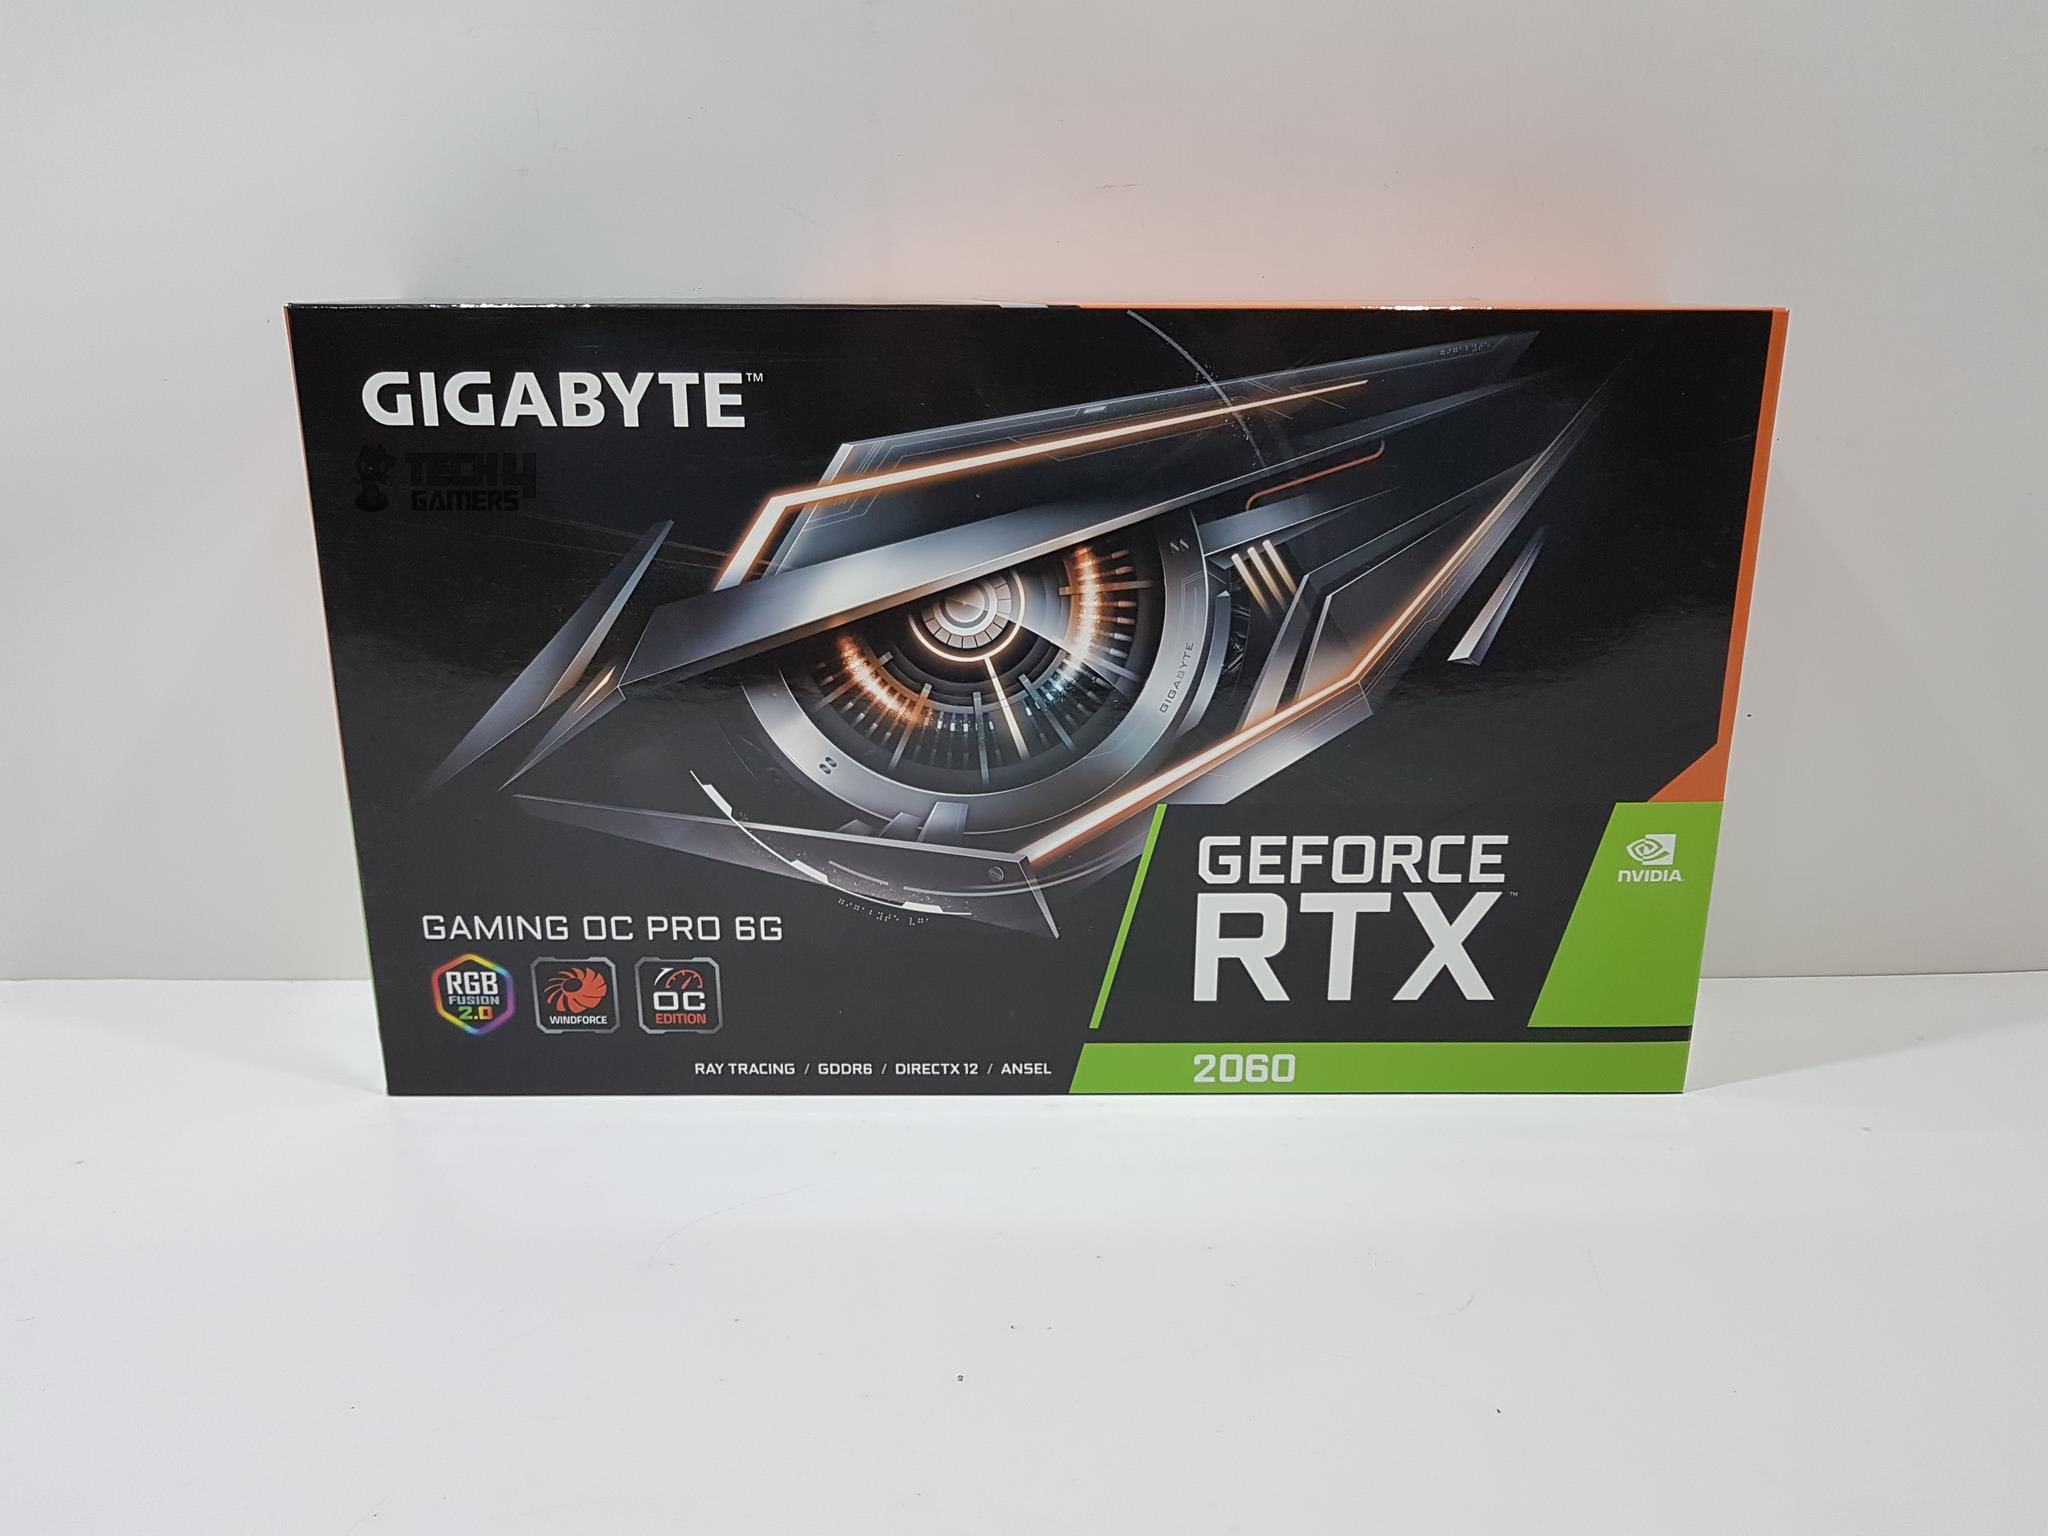 Gigabyte GeForce RTX 2060 Gaming Pro OC 6G — Packaging